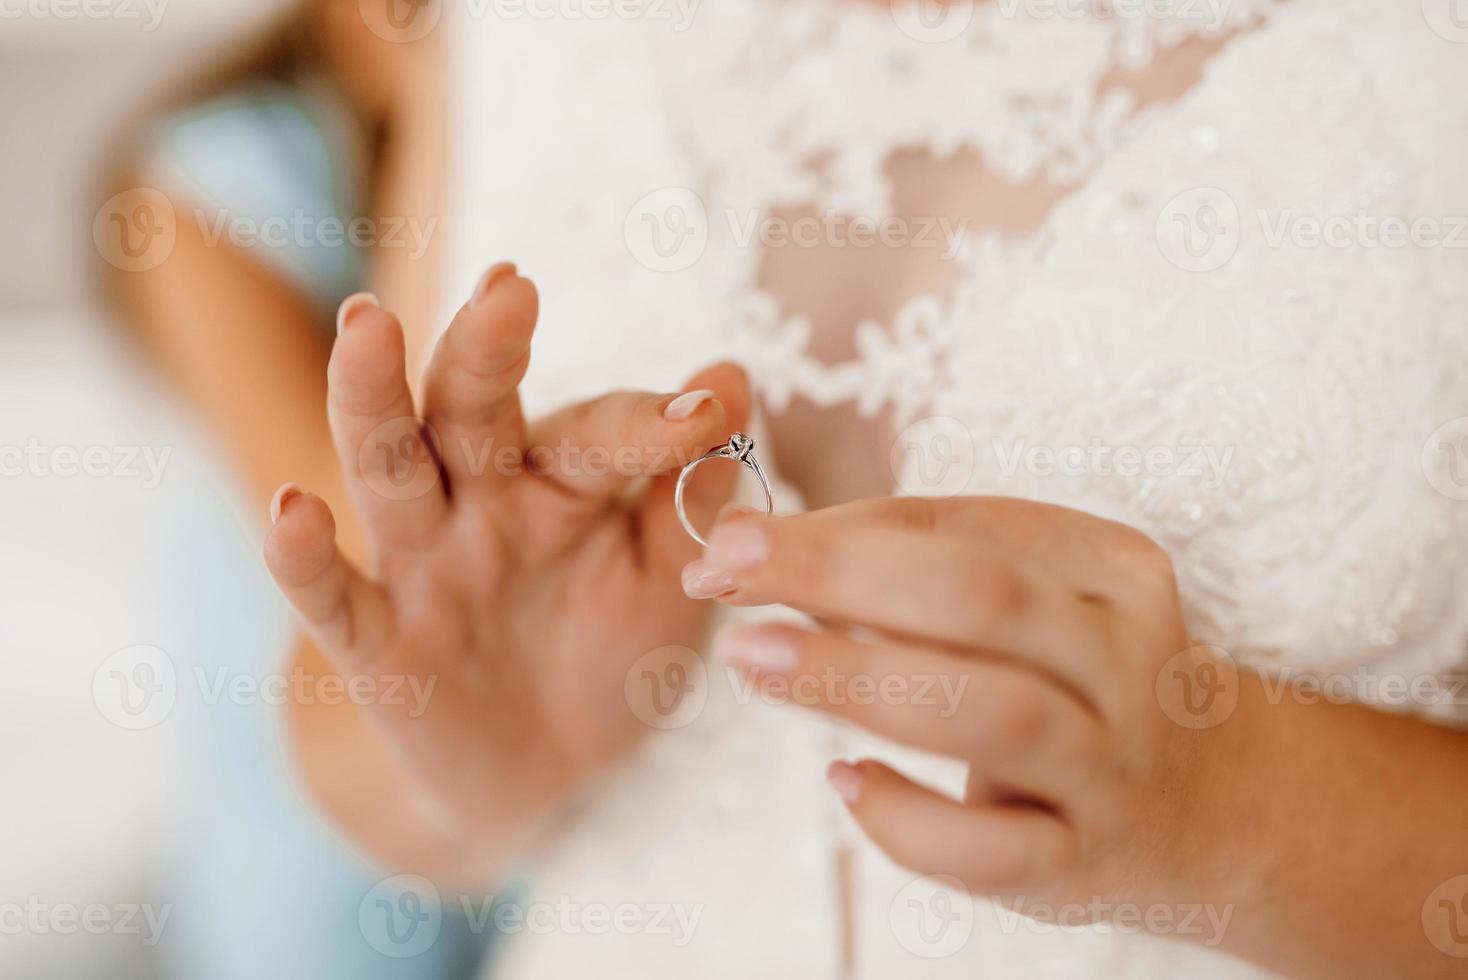 a noiva toca suavemente seu querido anel de noivado foto